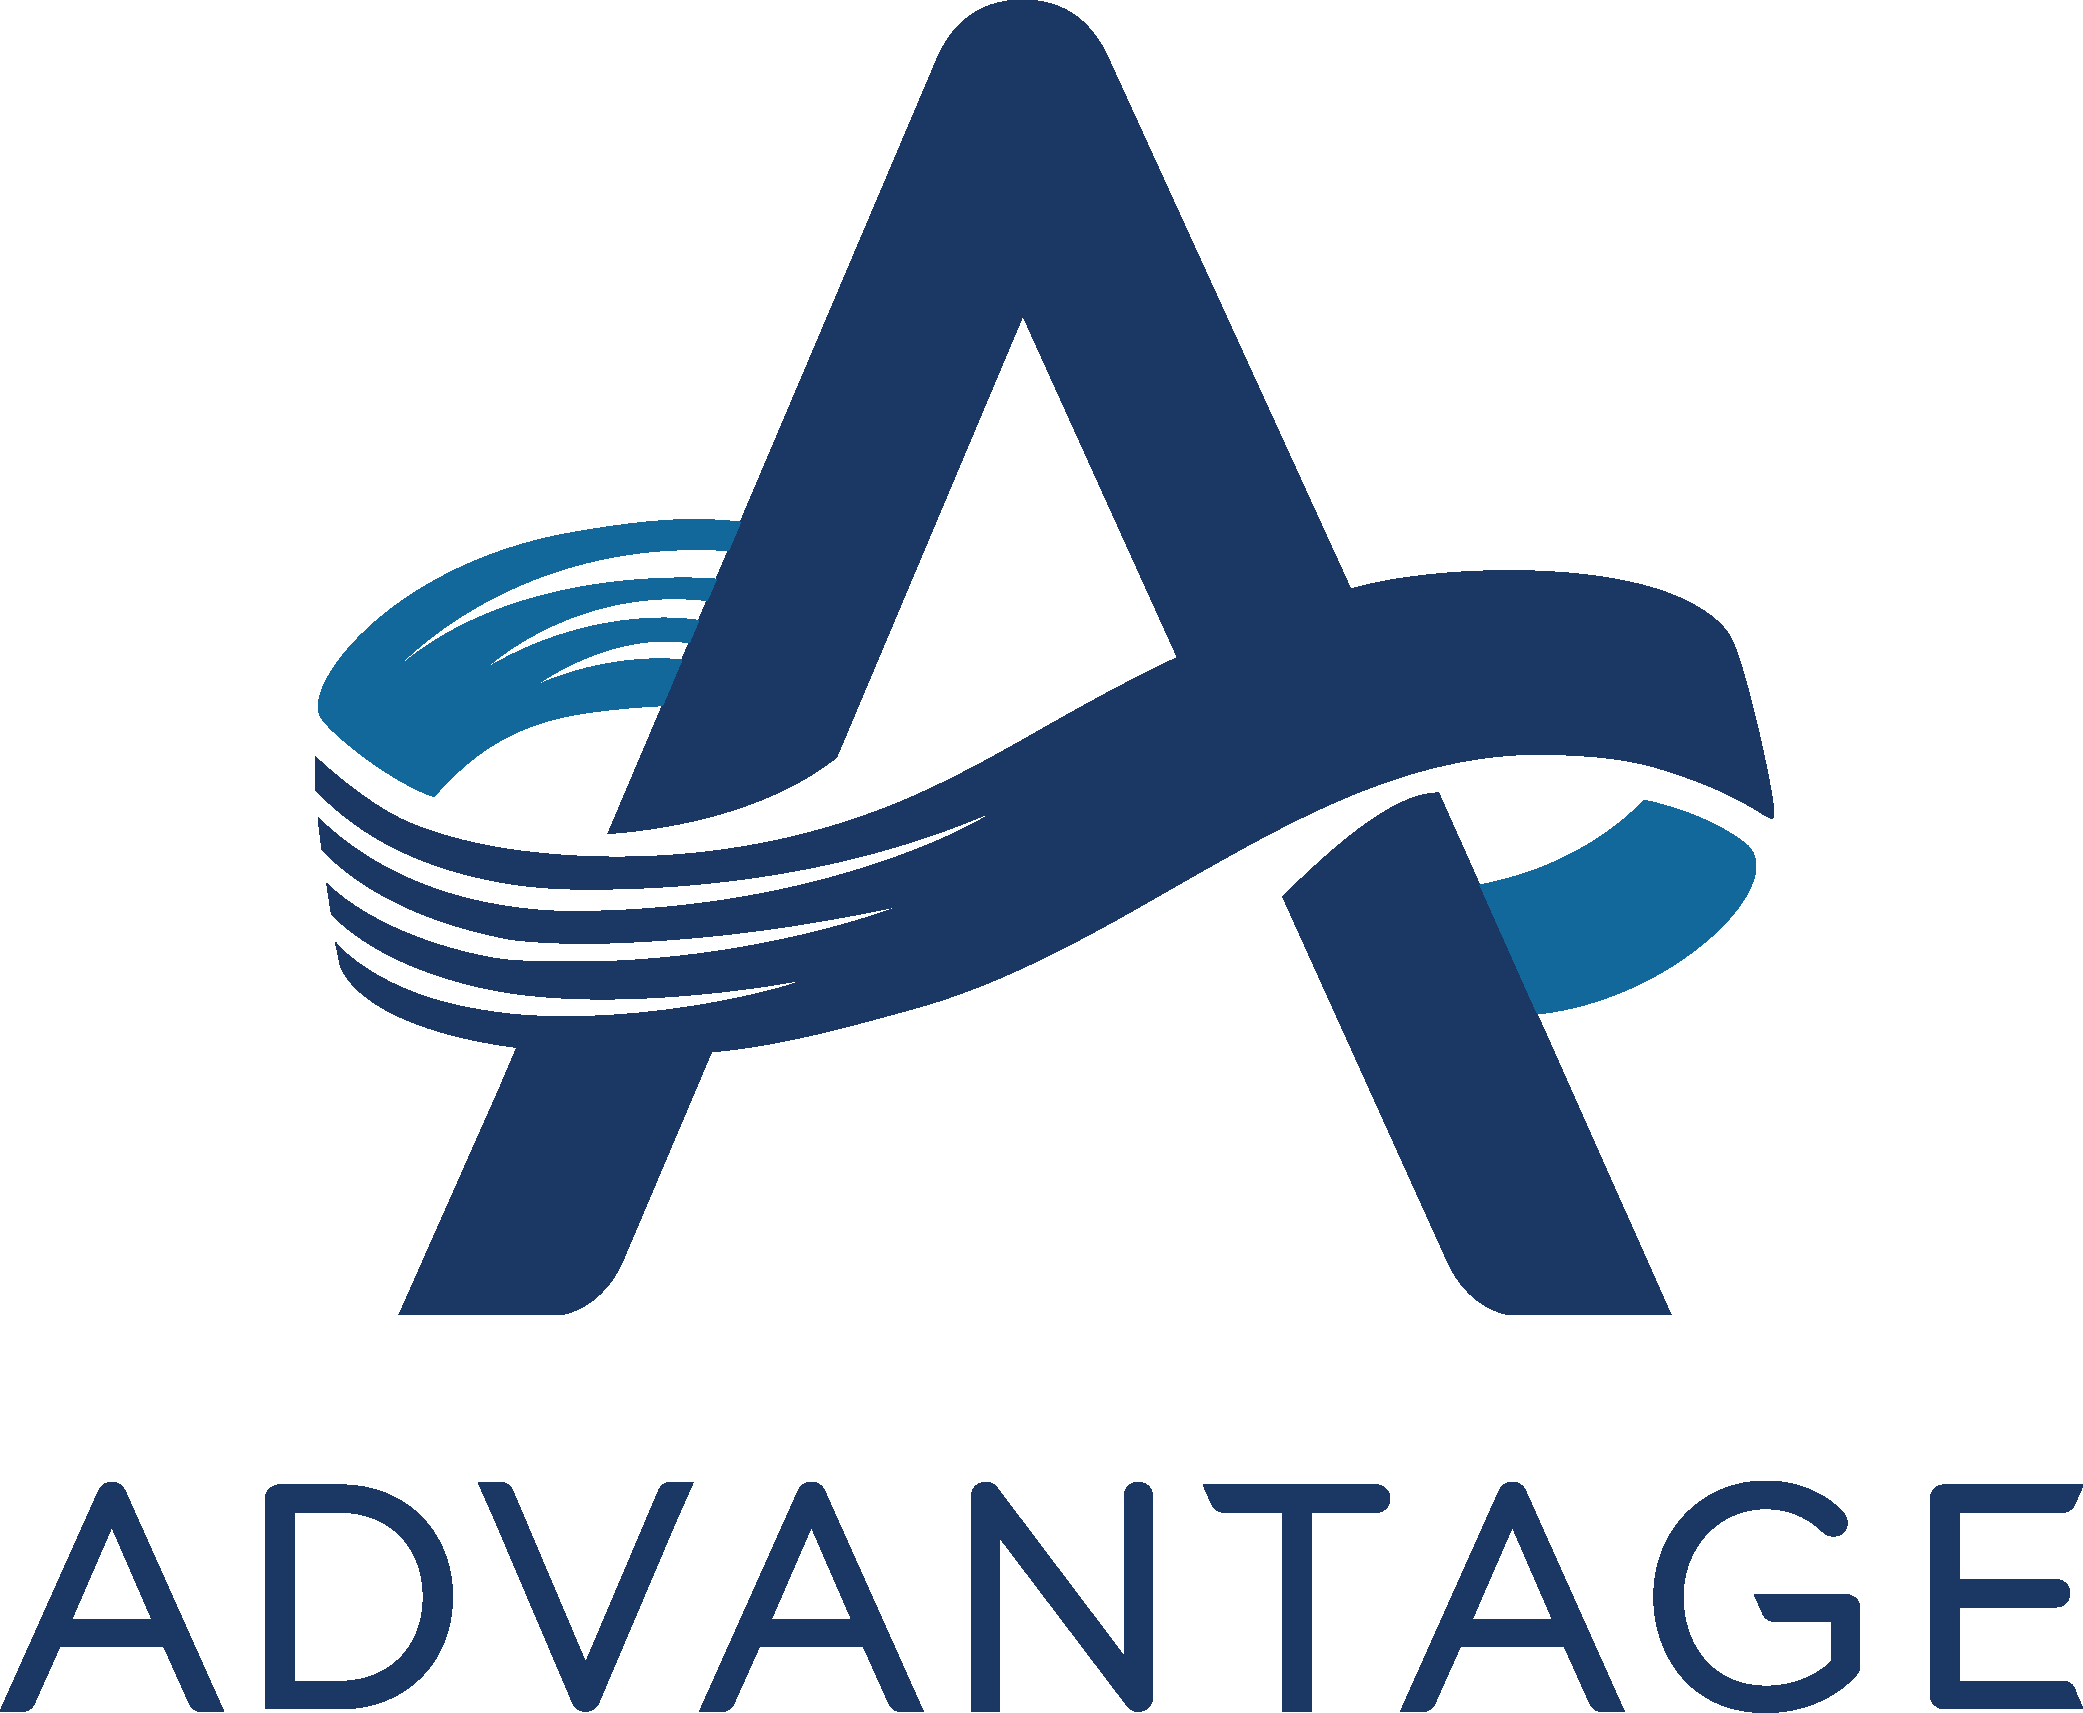 Advantage Communications Group